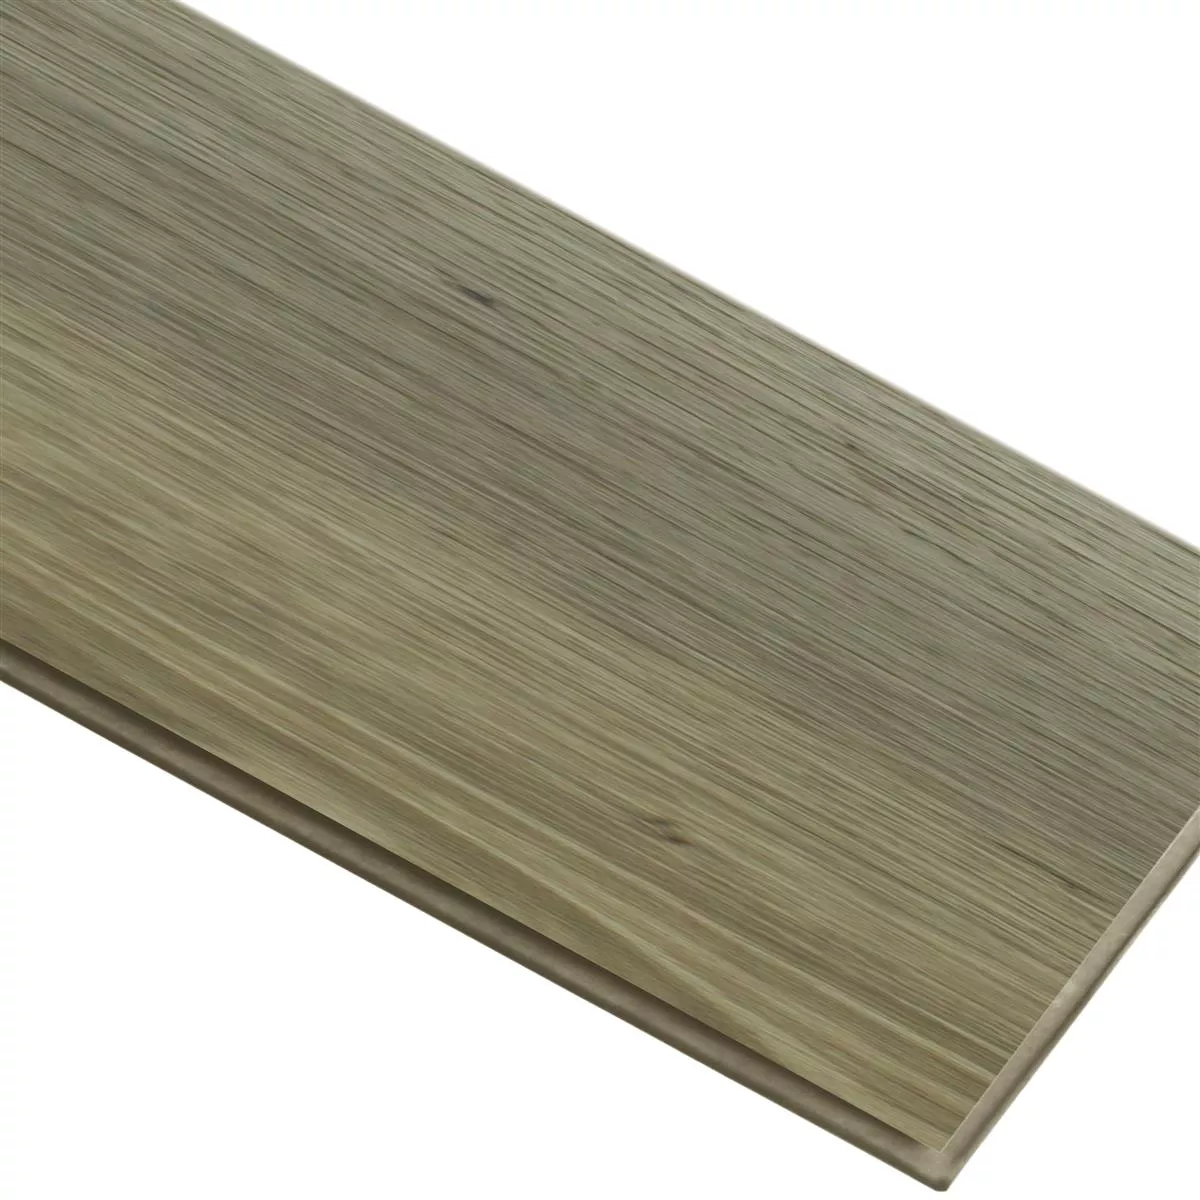 Vinyl Floor Tiles Adhesive Vinyl Newcastle 23,2x122,7cm Brown